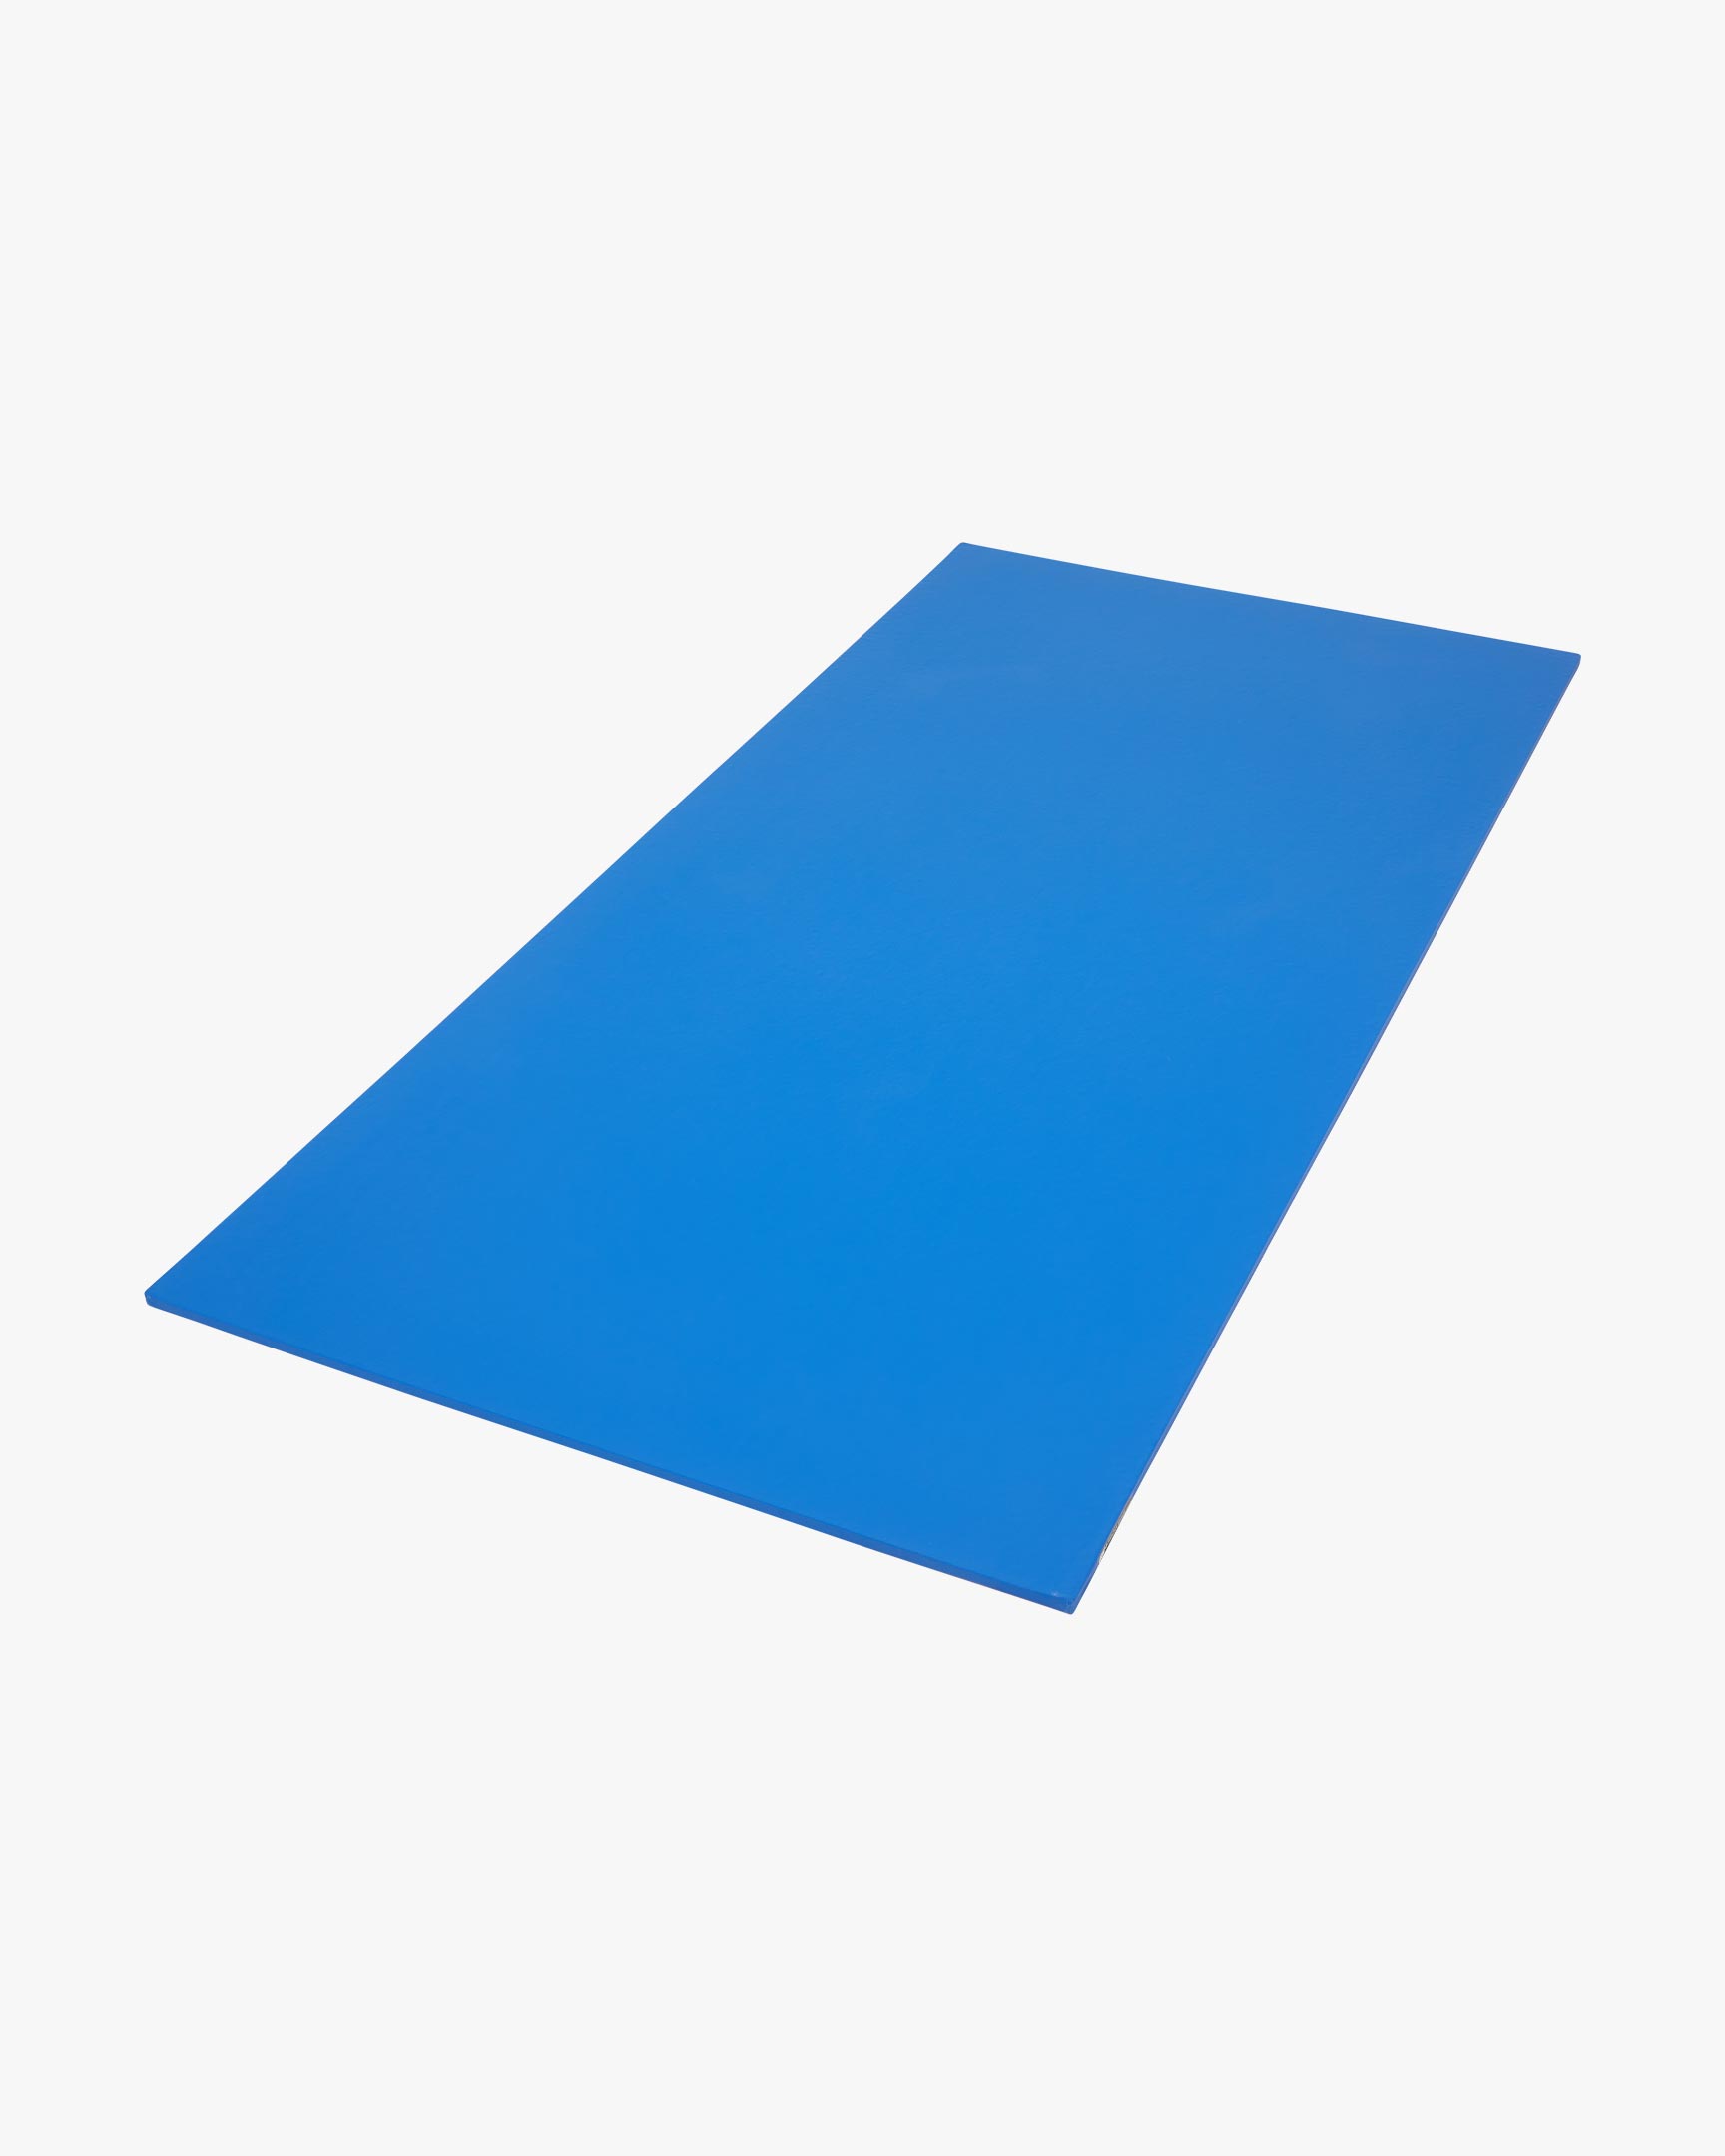 Smooth Tile Mat - 1m x 2m .75" Blue